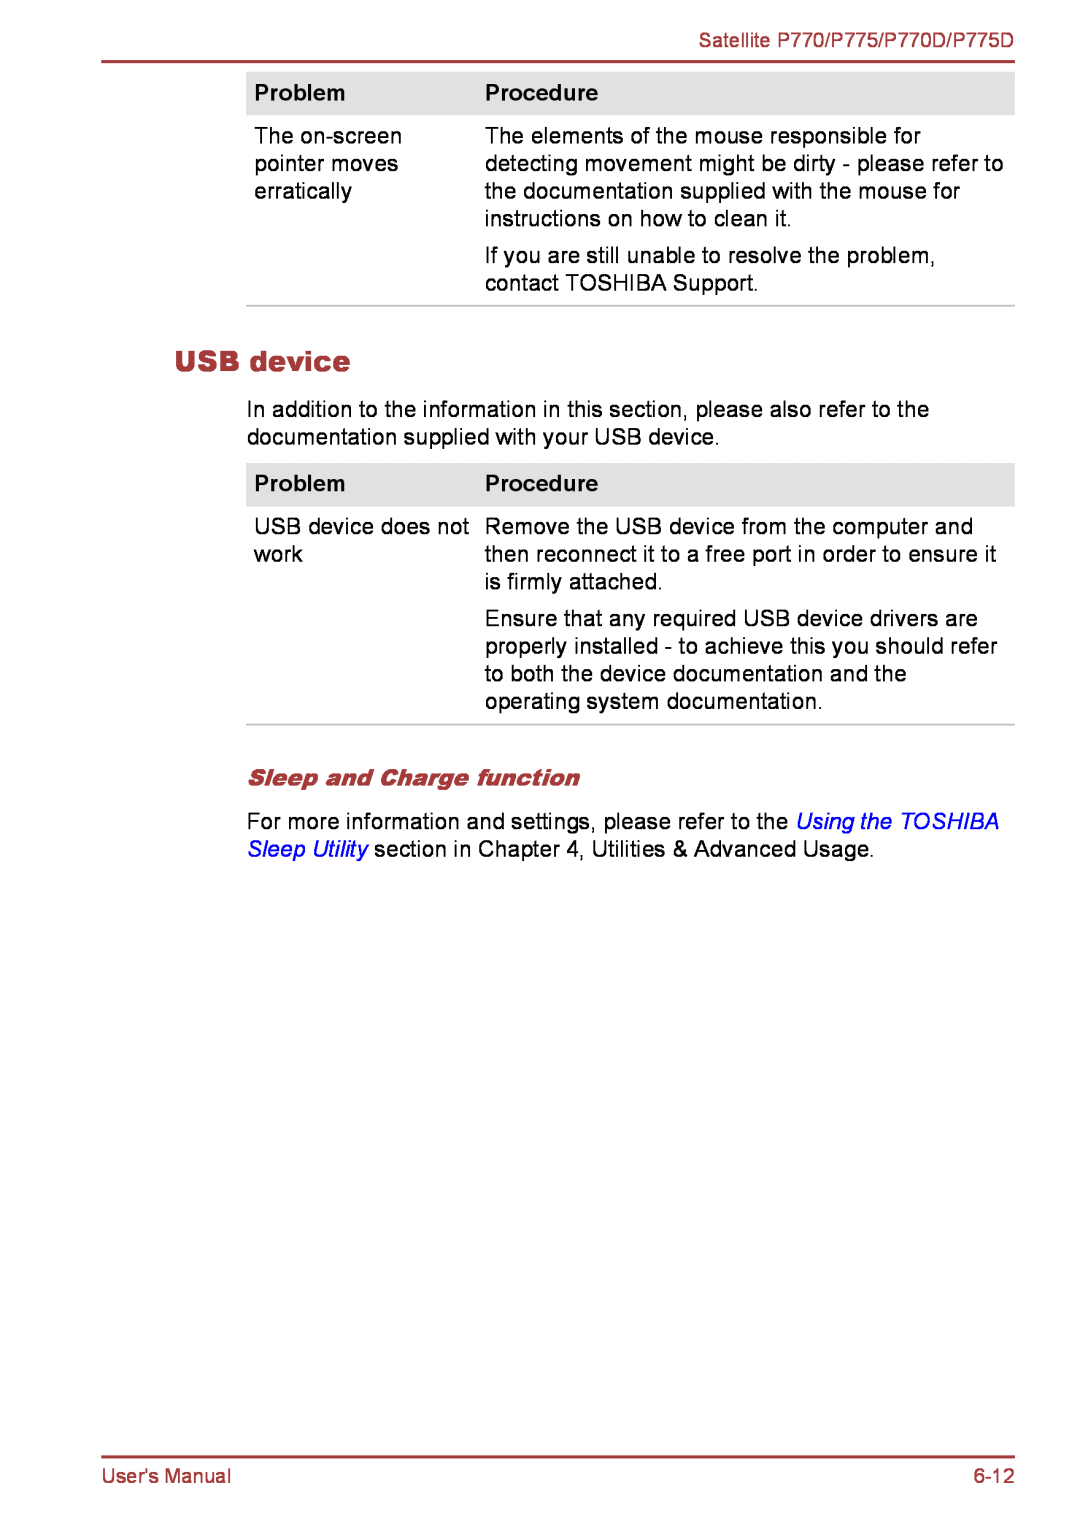 Toshiba P770 user manual USB device, Sleep and Charge function, ProblemProcedure 